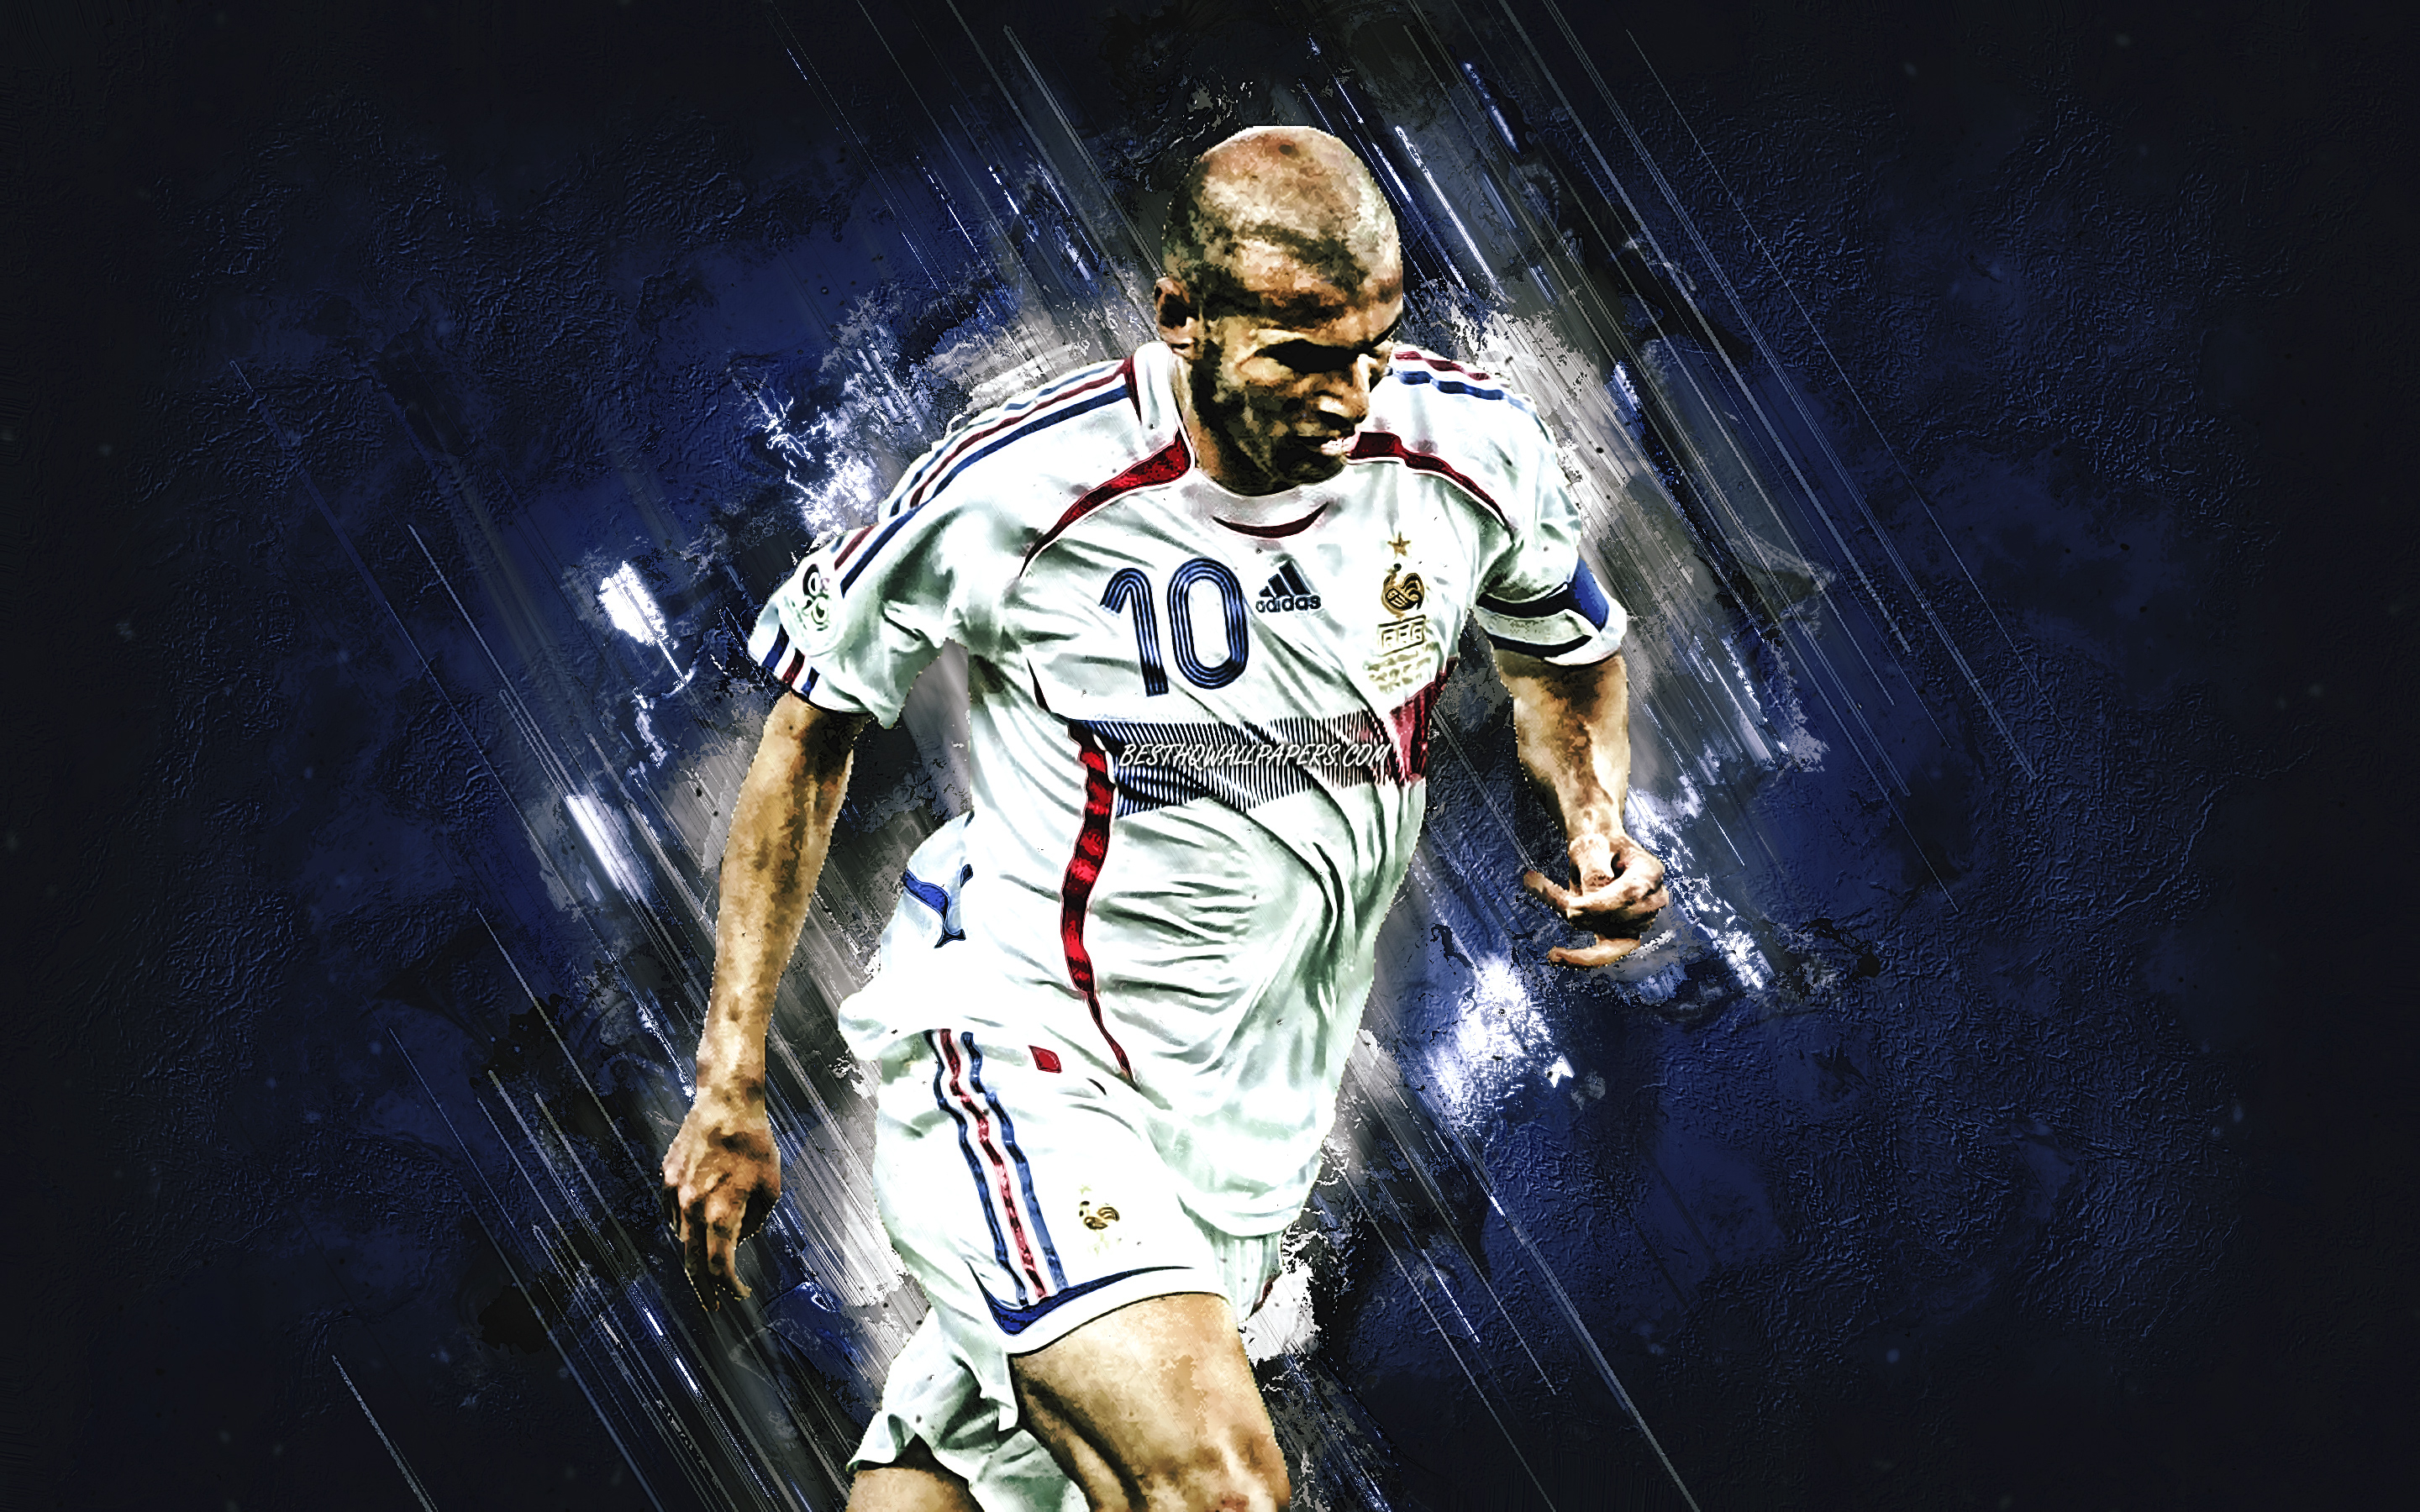 2880x1800 Descargar fondos de pantalla Zinedine Zidane, portrait, l&Atilde;&copy;gendaire footballeur fran&Atilde;&sect;ais, star du football mondial, France, football, &Atilde;&copy;quipe de France de football monitor con una resoluci&Atilde;&sup3;n . Imagenes de escritori